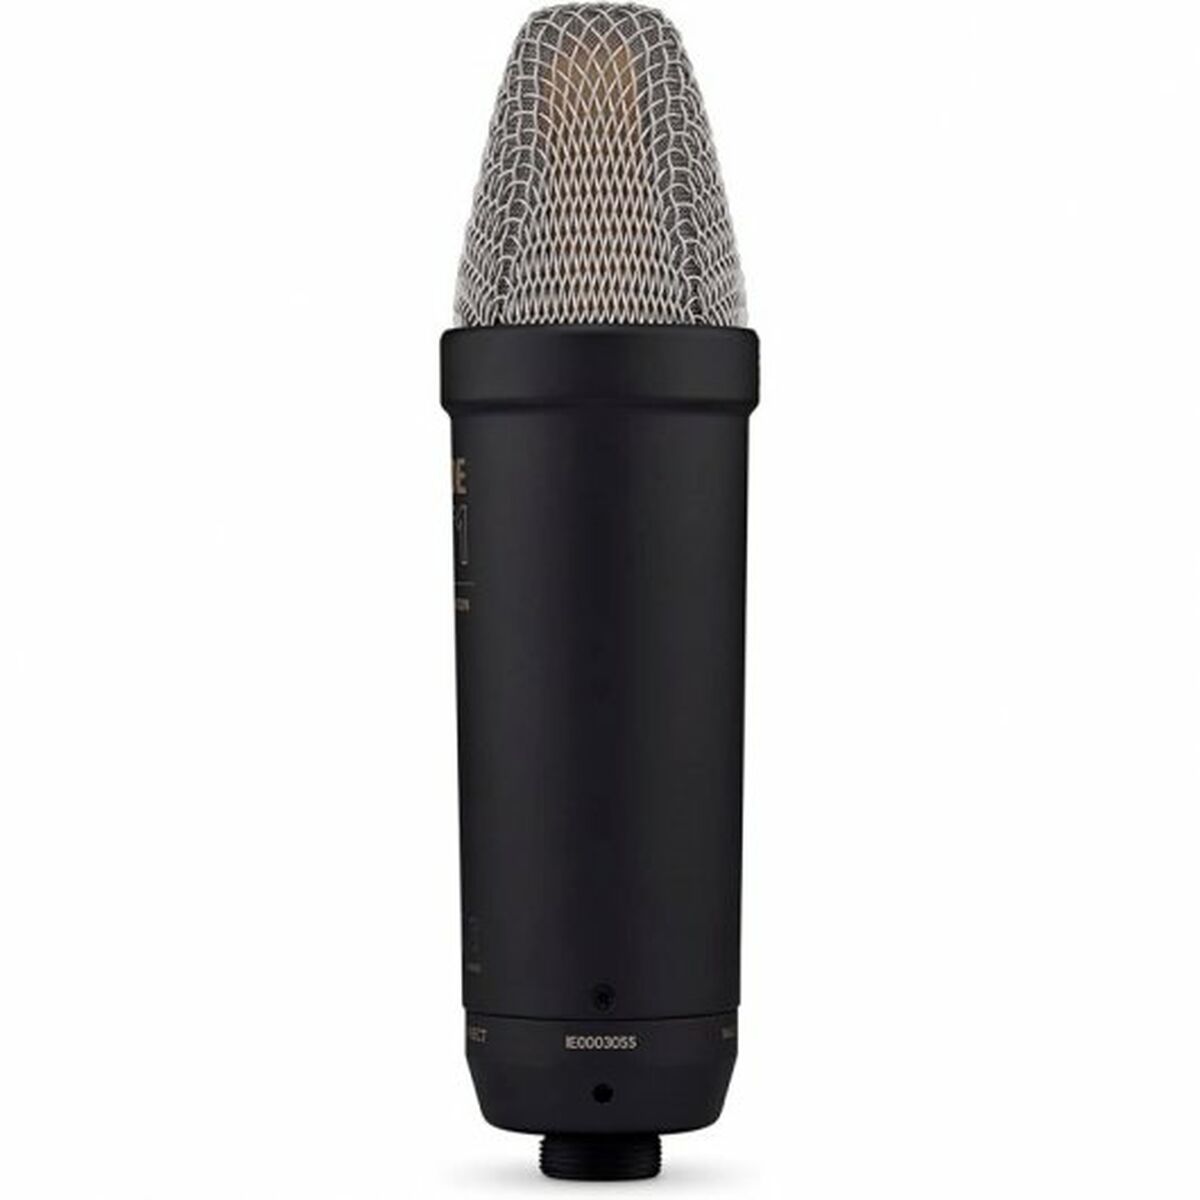 Micrófono Rode Microphones NT1 5a